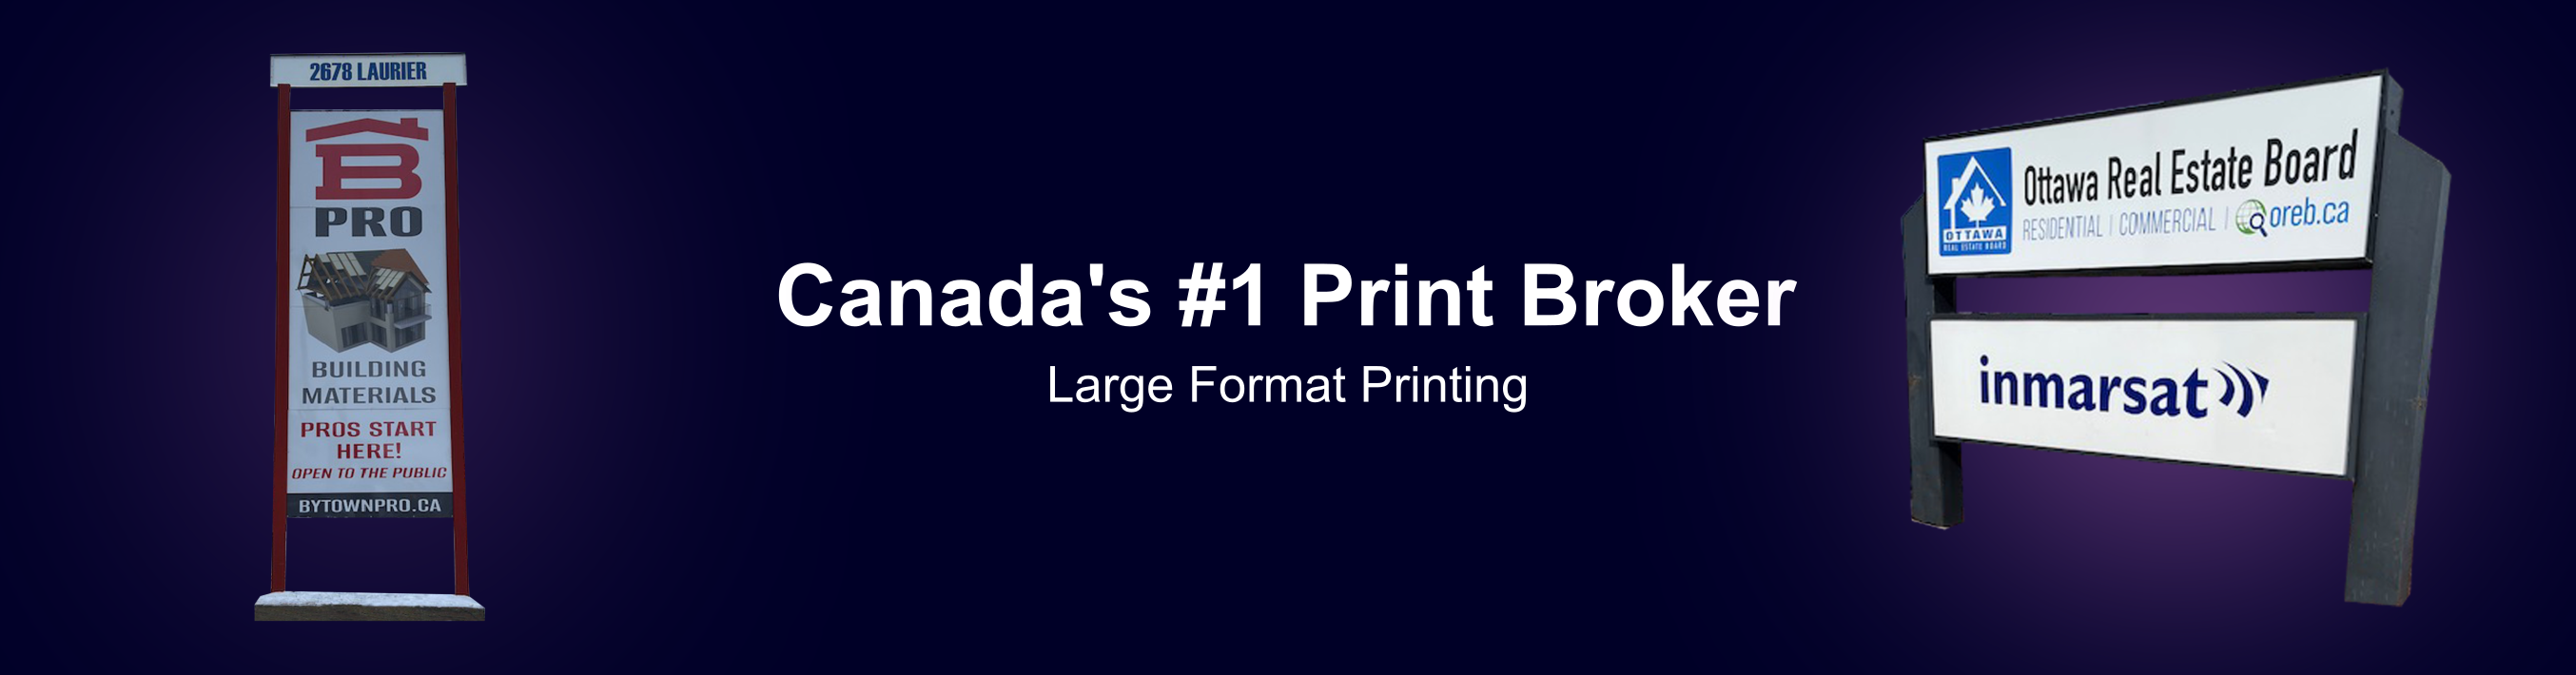 Print broker - Slide 4 Rev 3